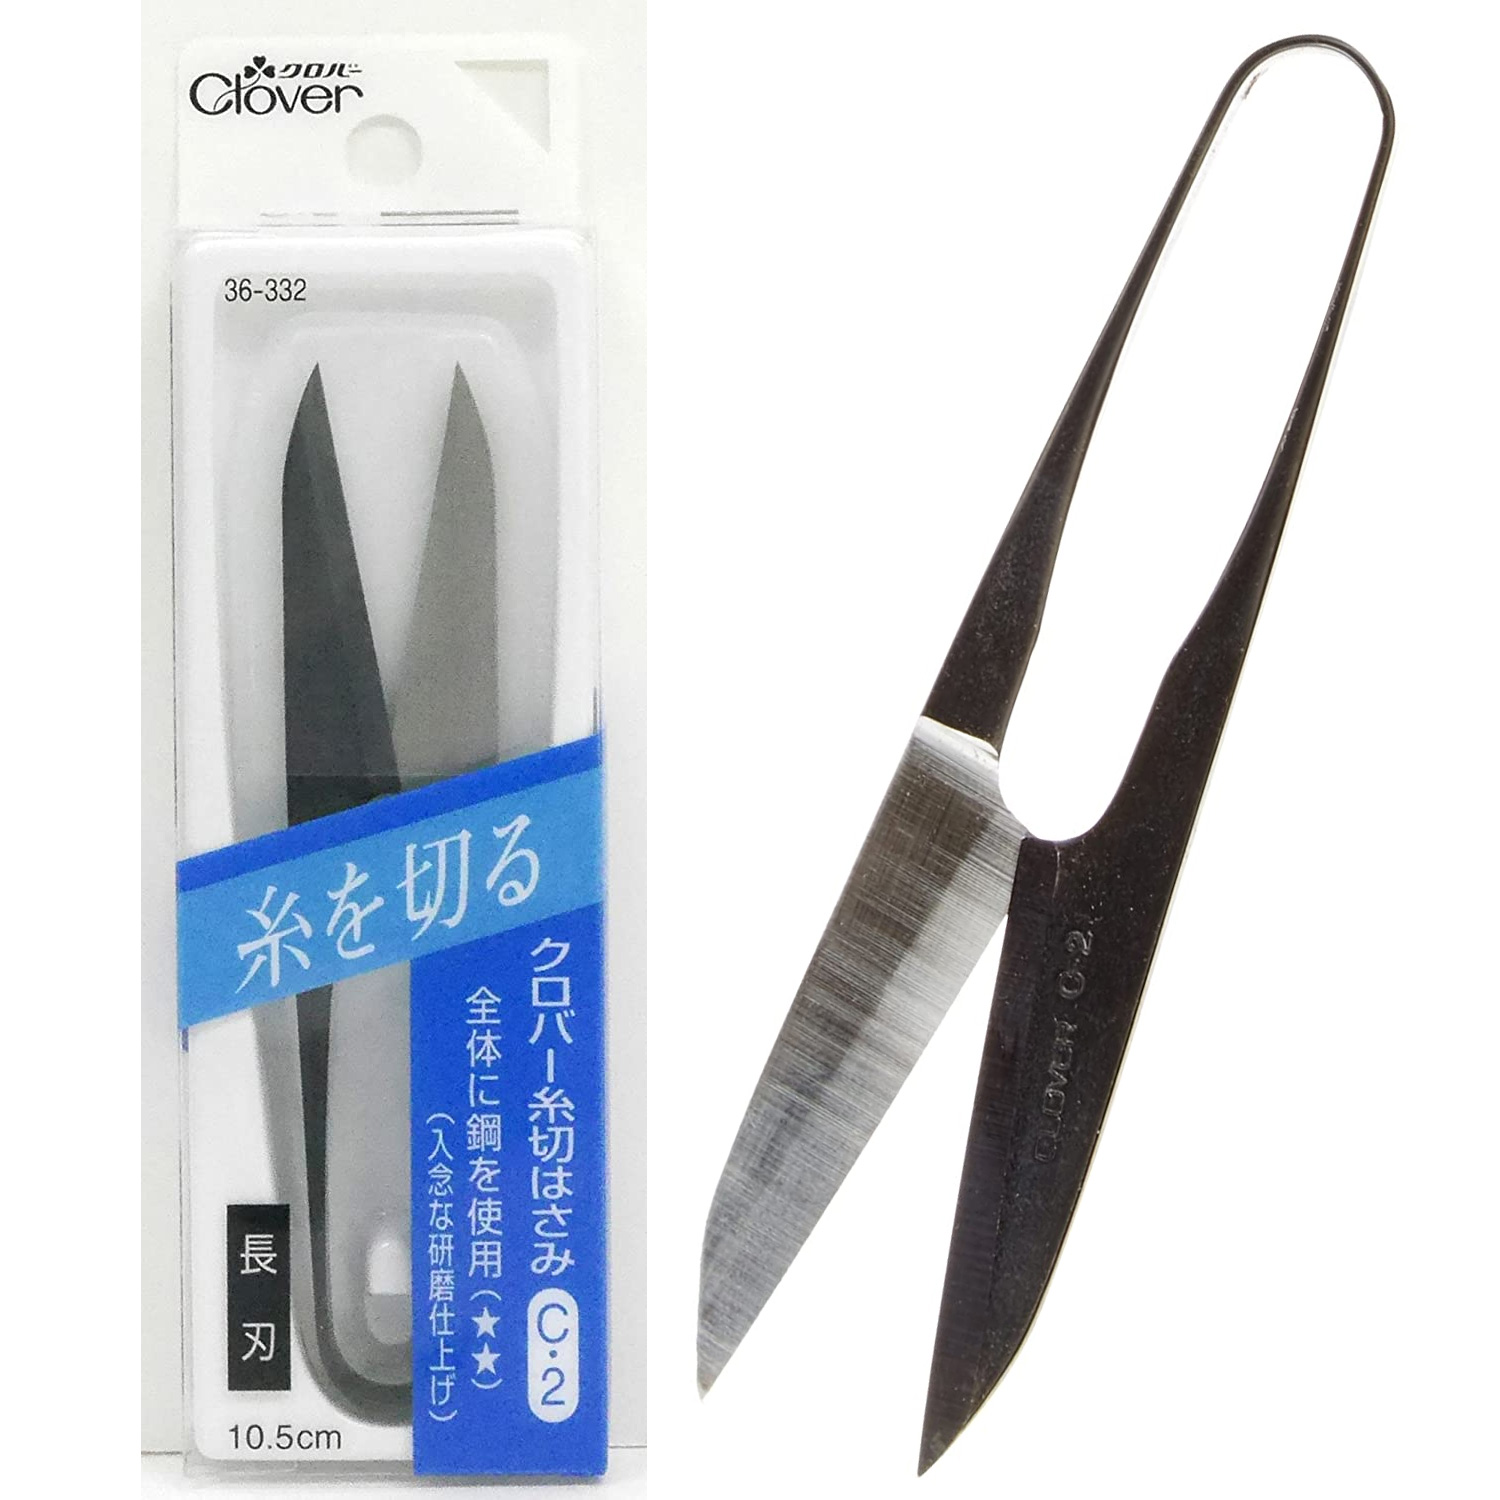 CL36-332 Clover Thread Scissors C-2 long blade (pcs)